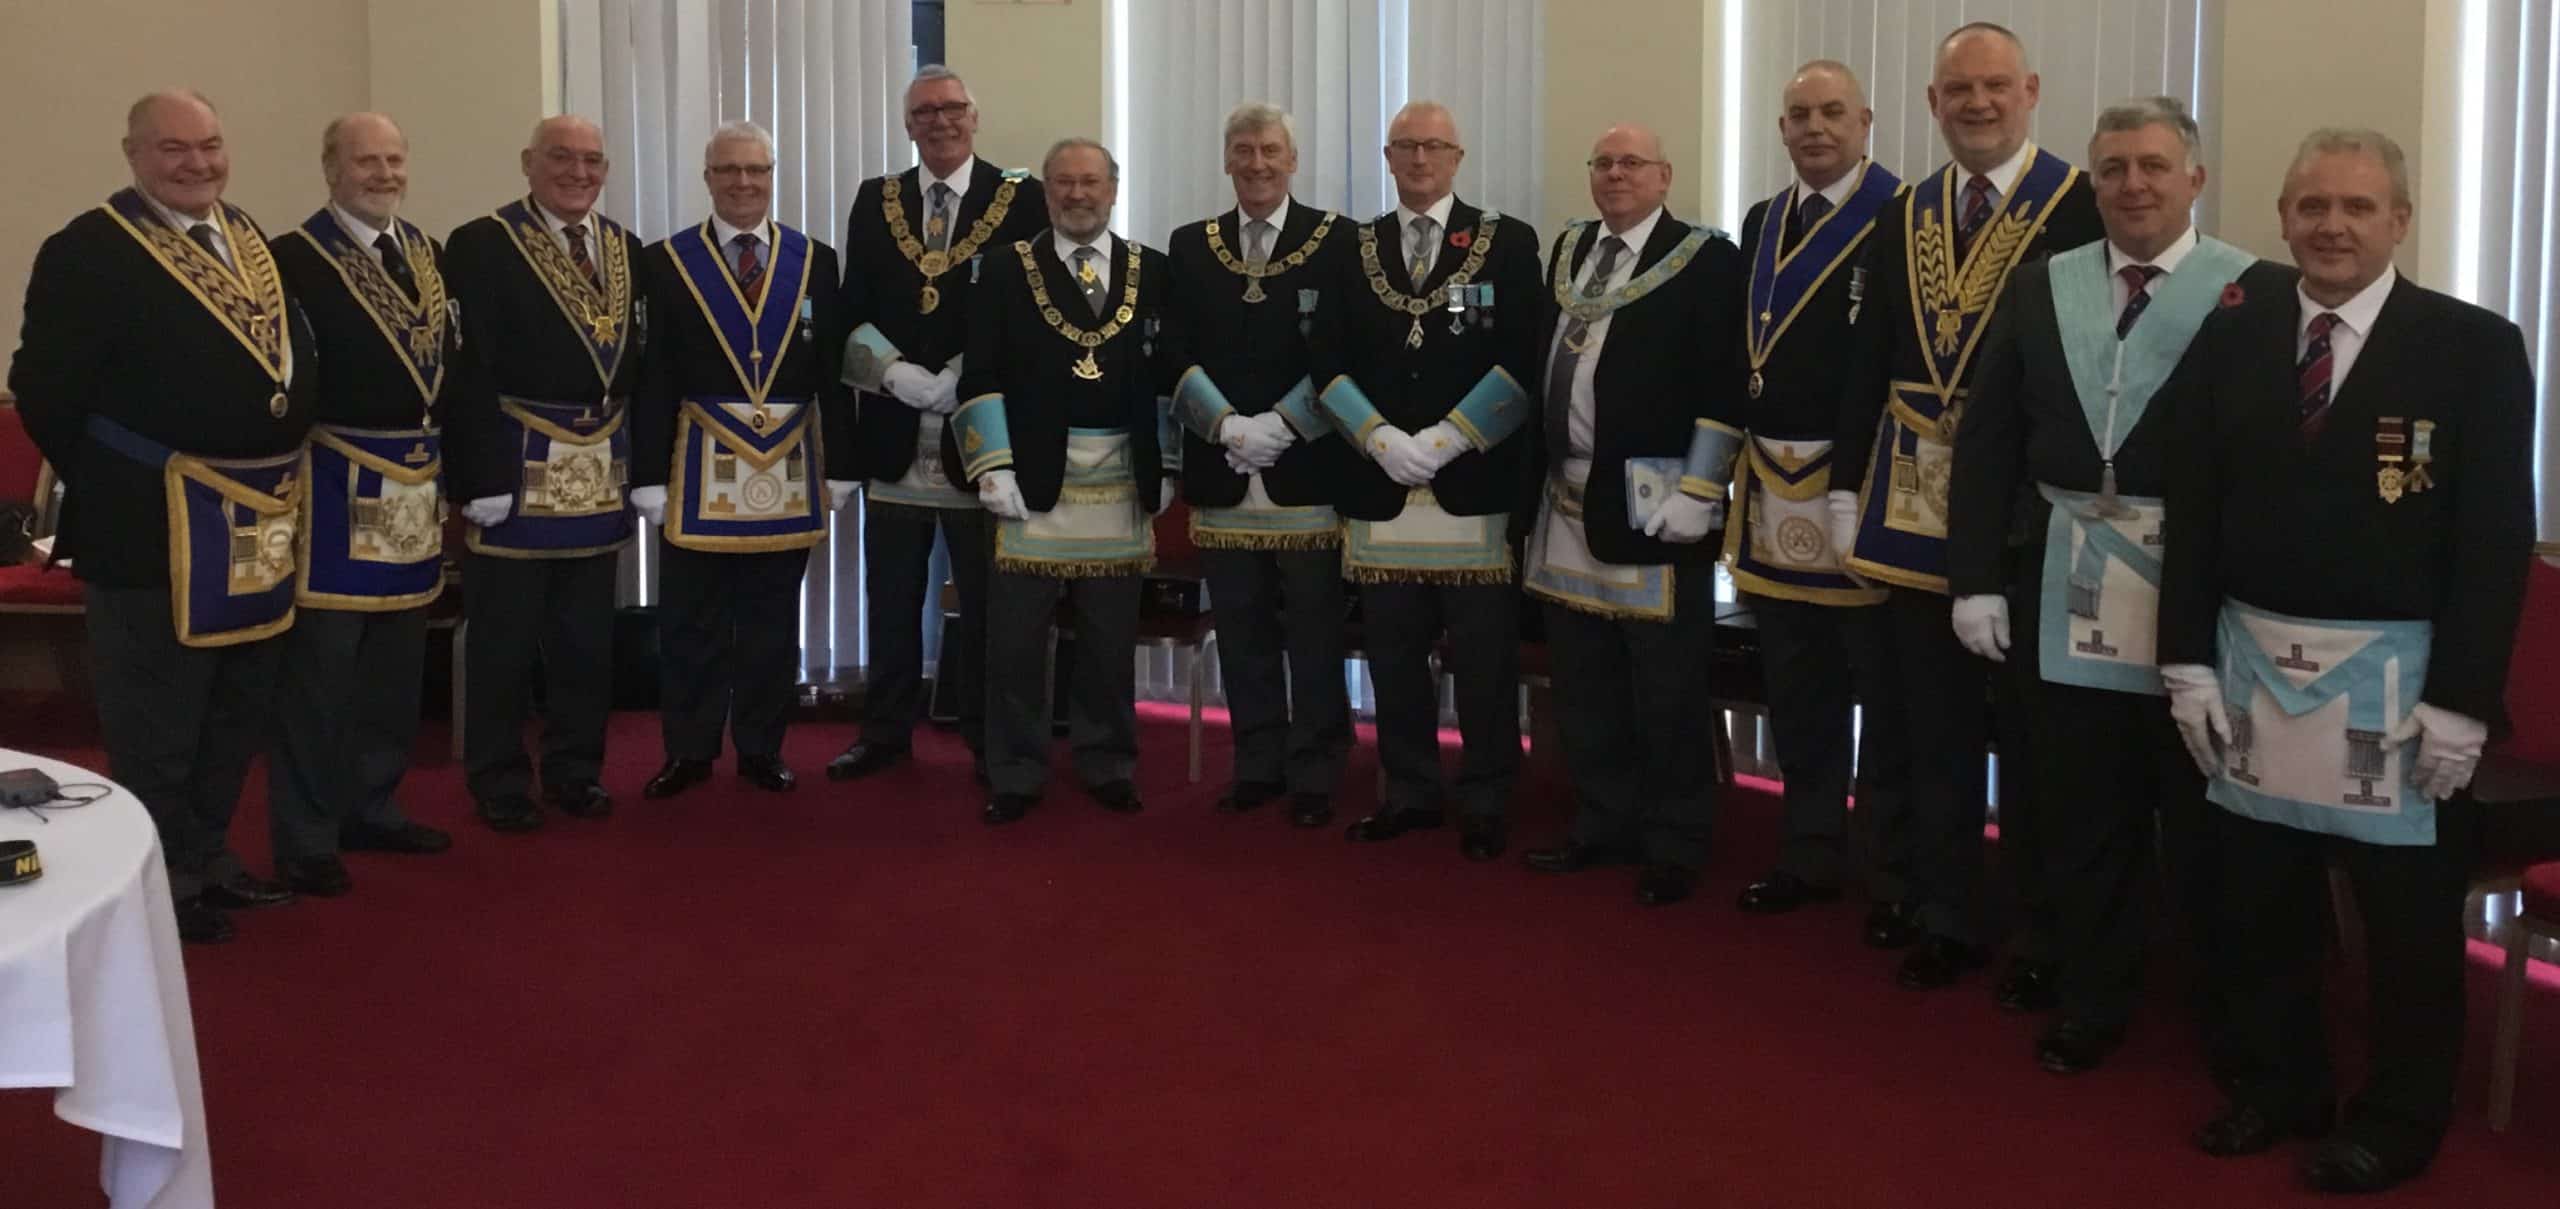 East Lancashire Masons’ visit to Belfast